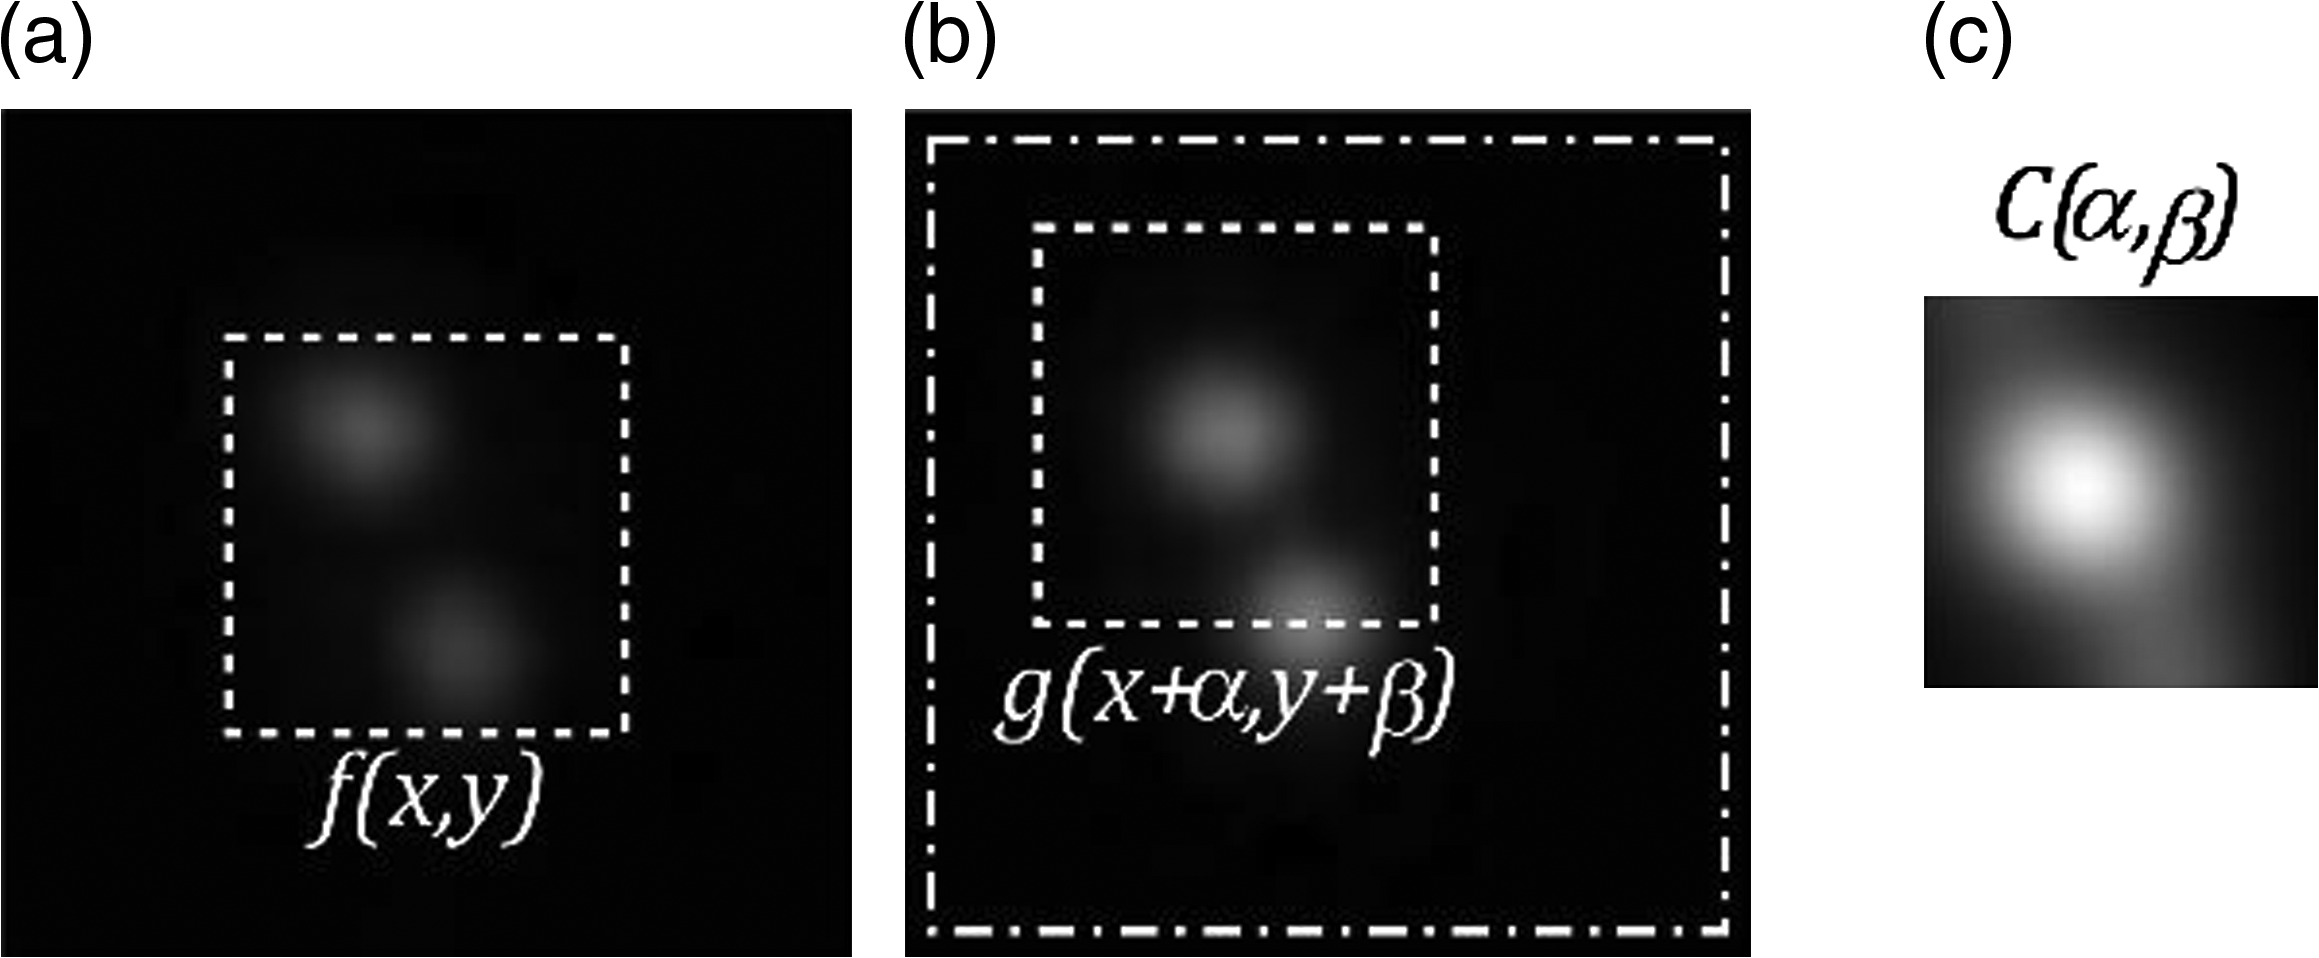 Imaging Performance Of Microscopy Adaptive Optics System Using Scene Based Wavefront Sensing